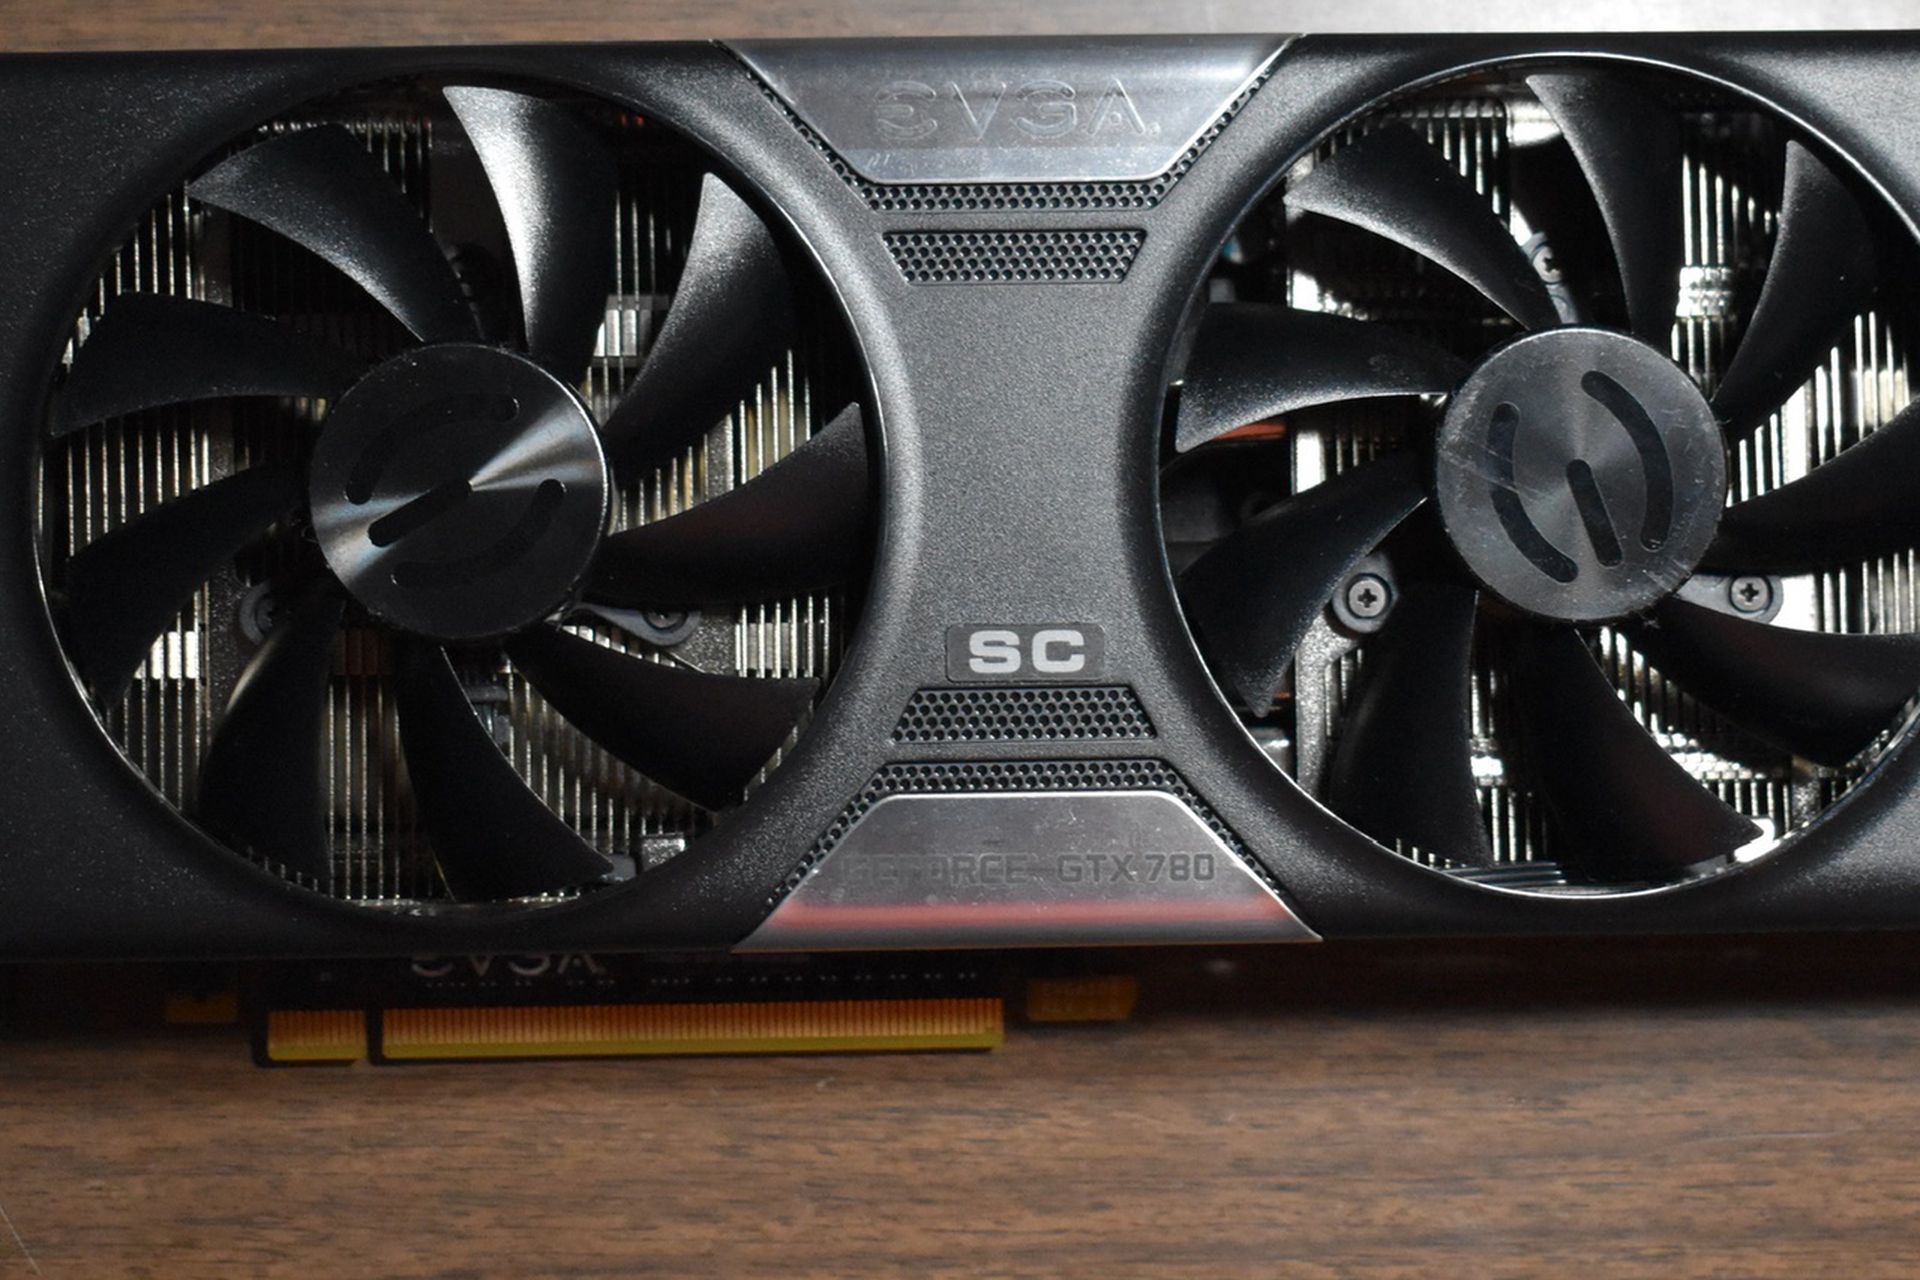 EVGA GeForce GTX 780 SC